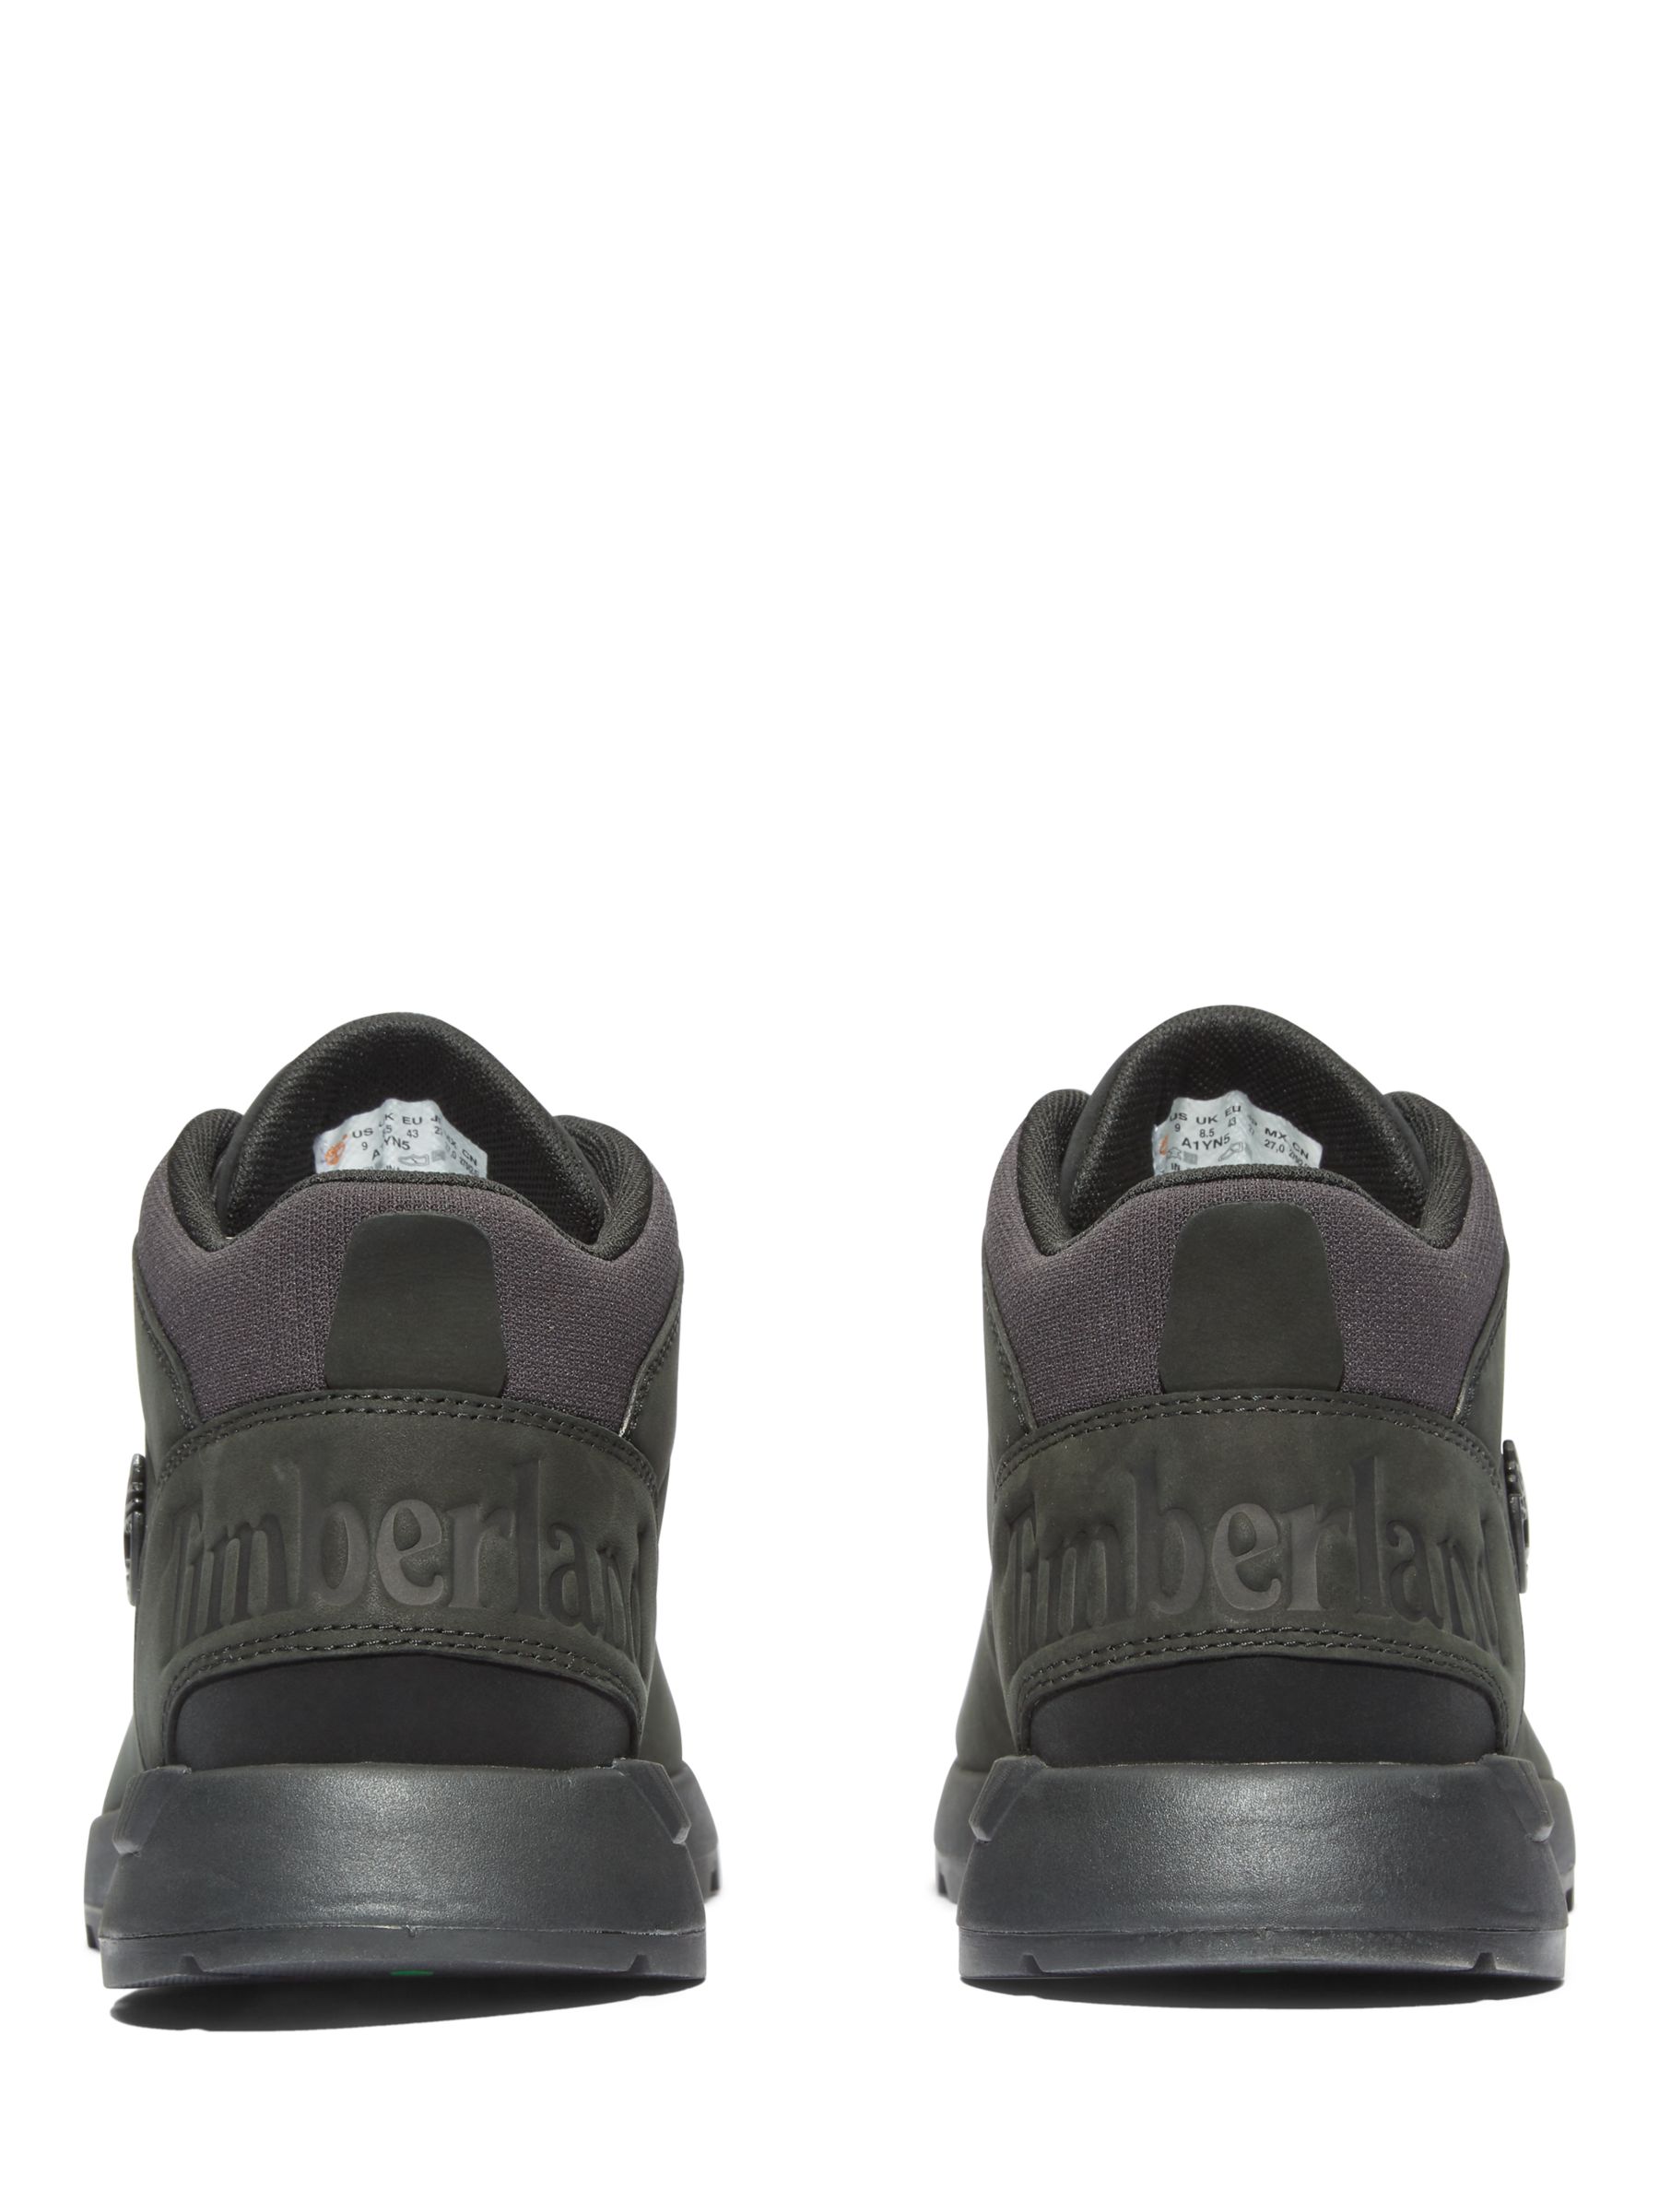 Buy Timberland Sprint Trekker Leather Boots, Black Online at johnlewis.com